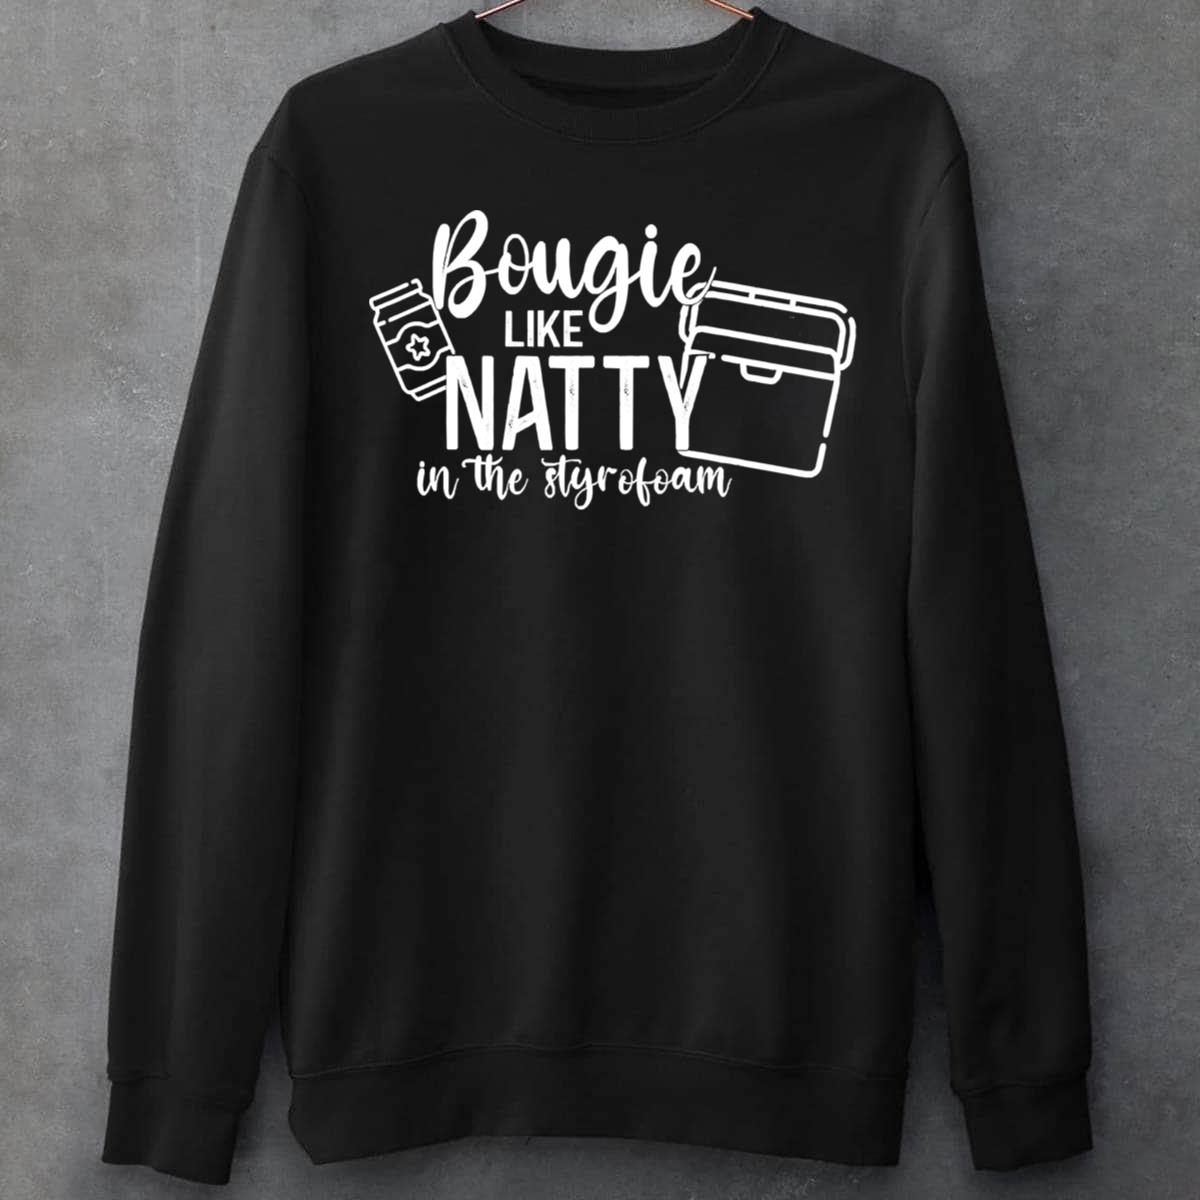 Bougie Like Natty In The Styrofoam Humor Unisex T-Shirt